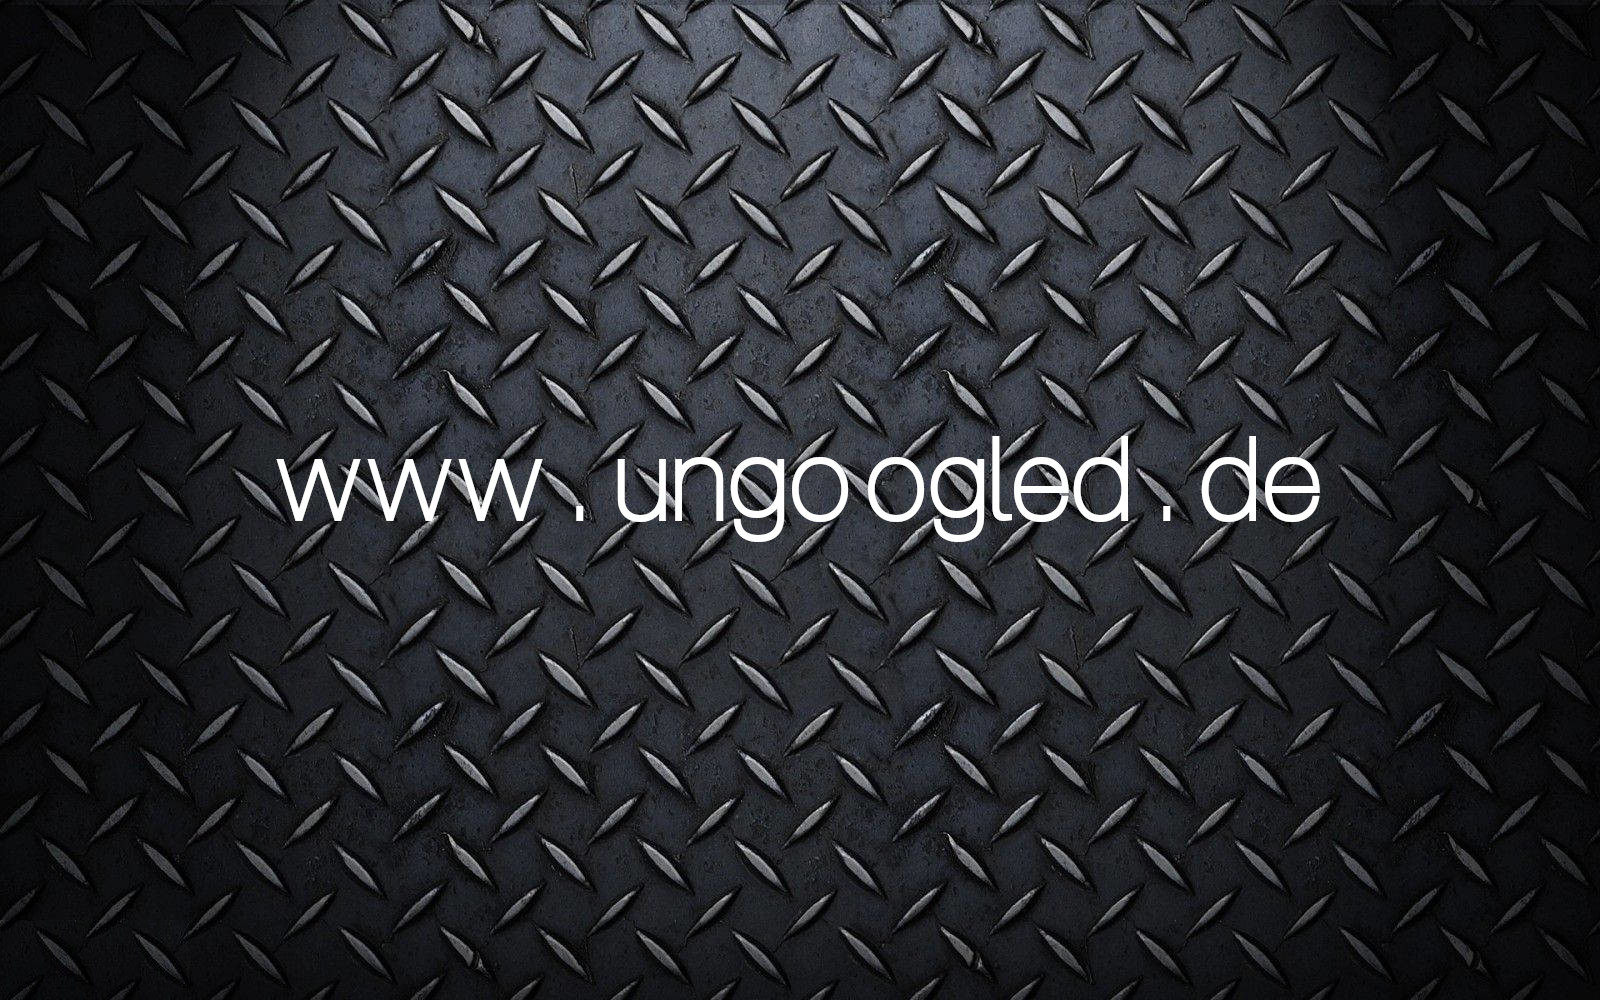 www.ungoogled.de